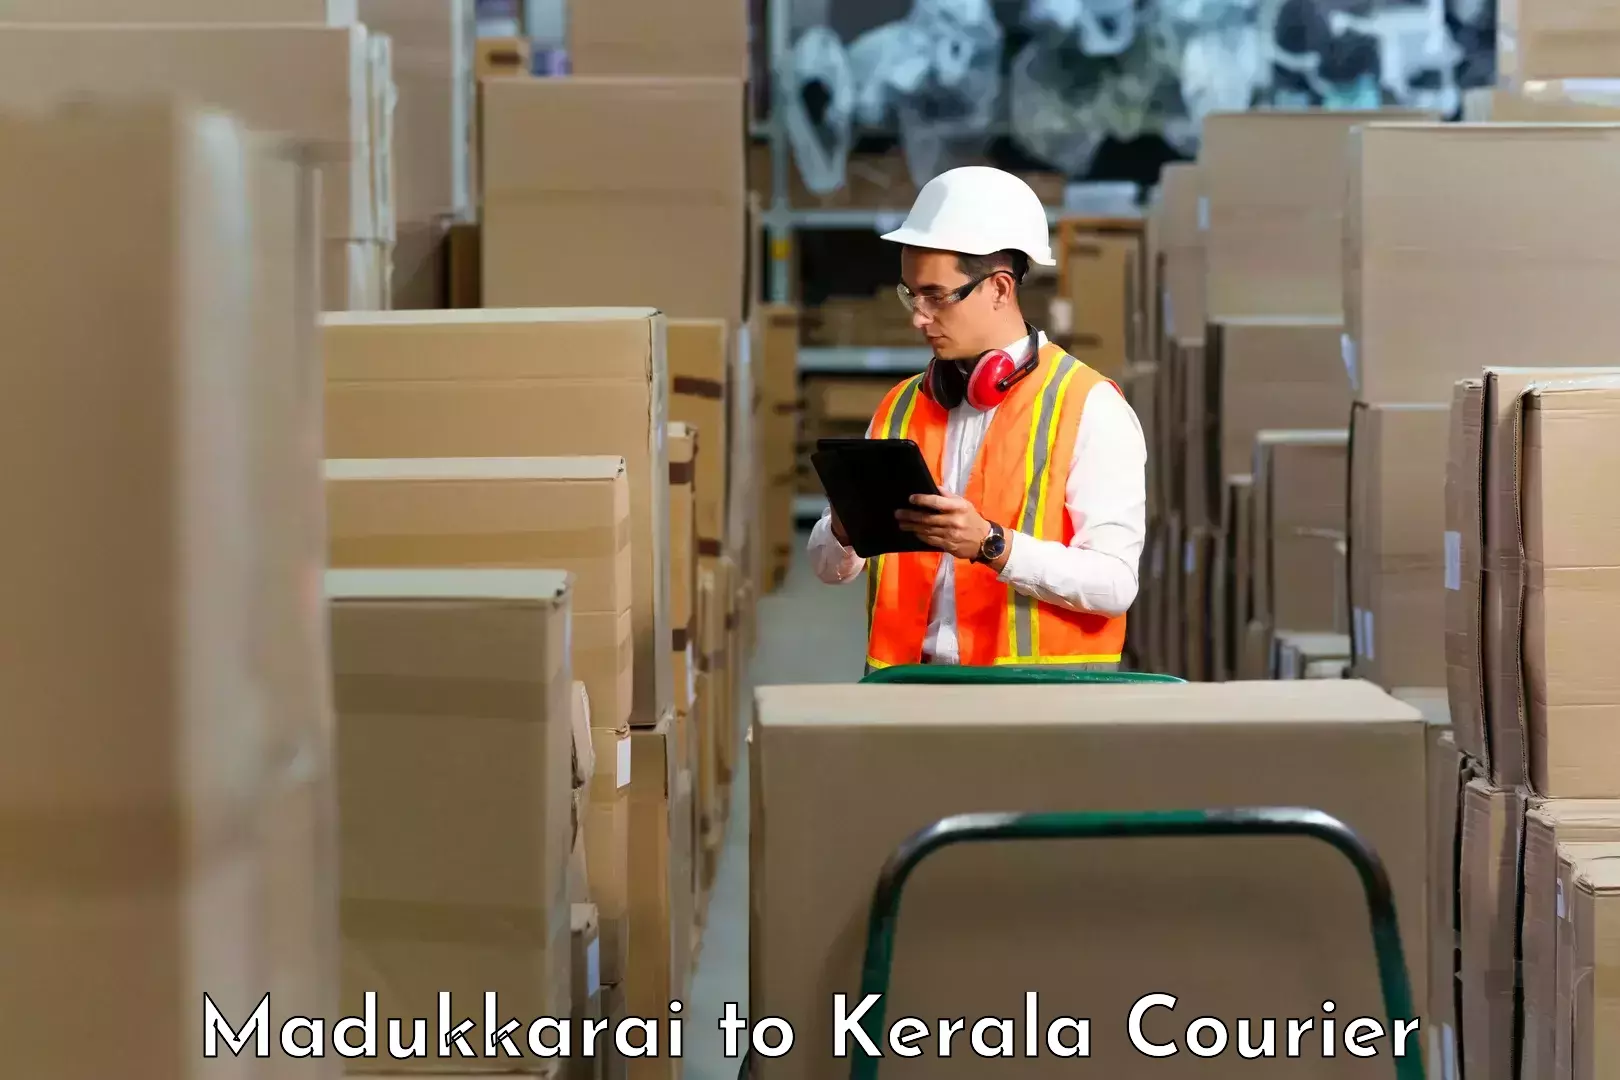 Courier service booking Madukkarai to Tiruvalla